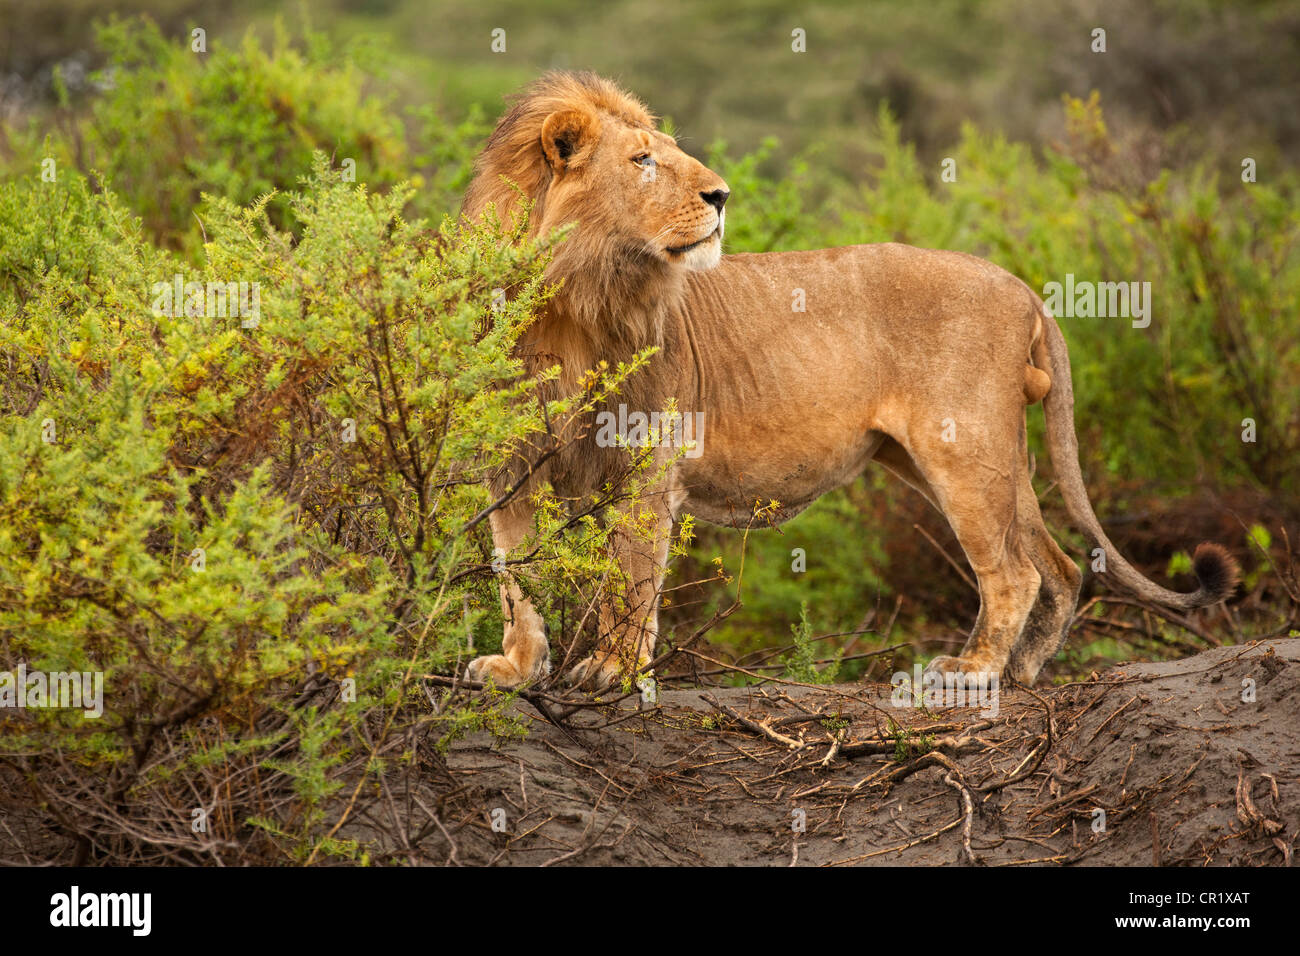 Male Lion in All his Splendor Stock Photo